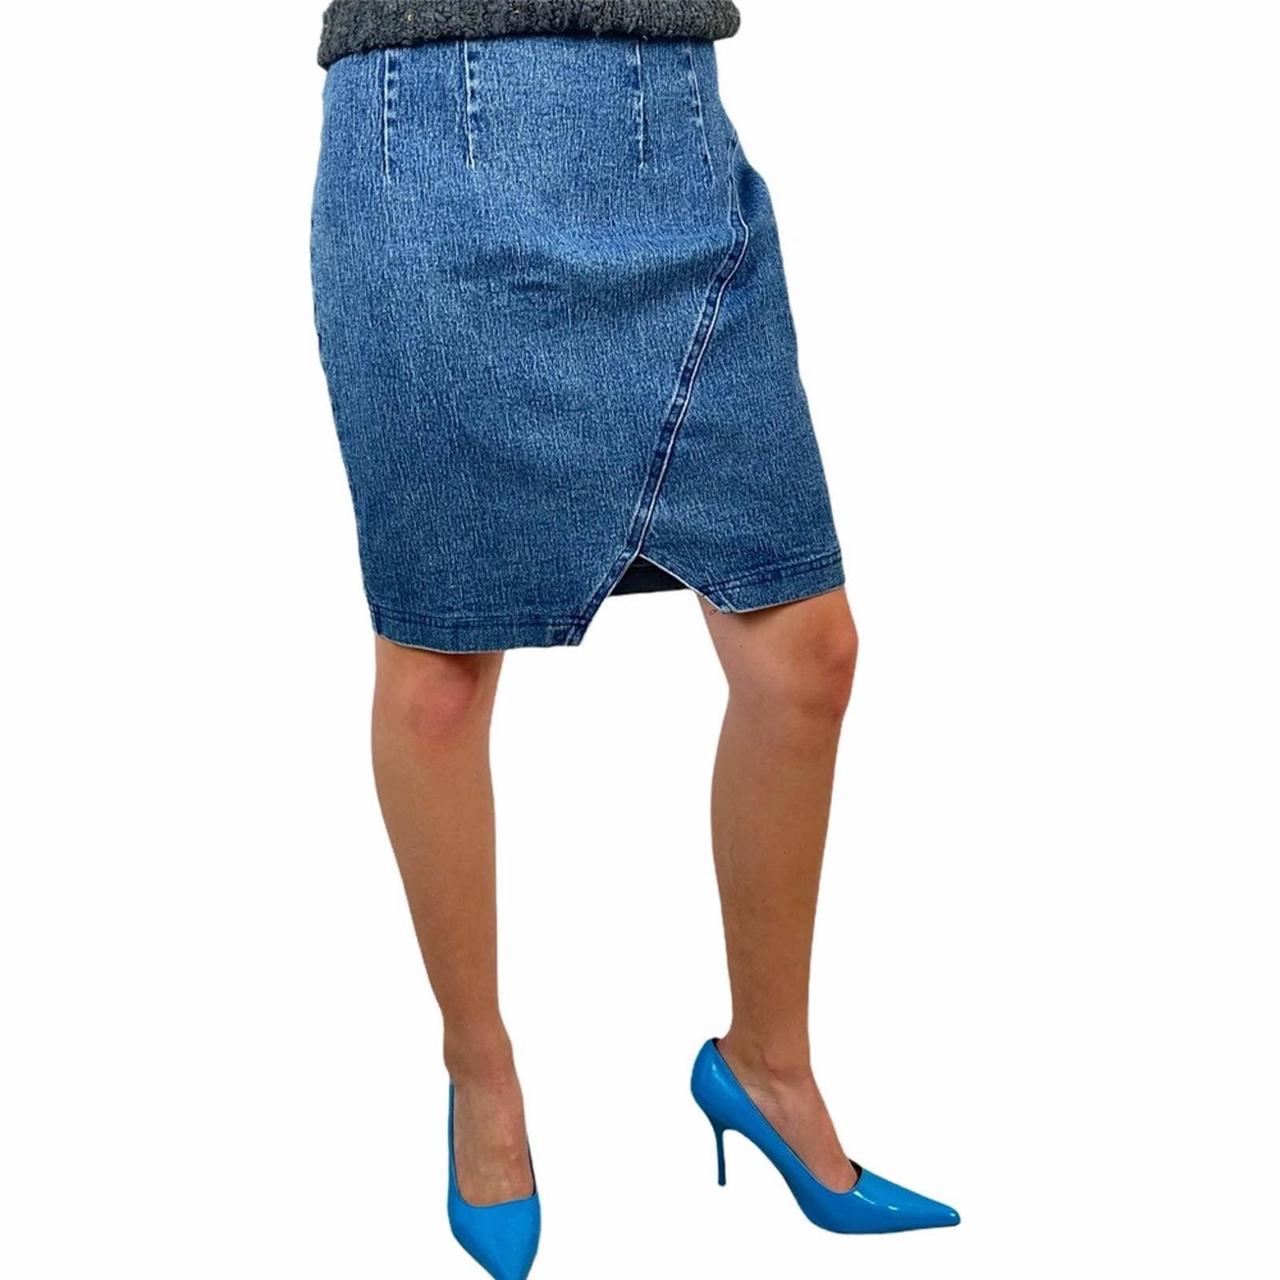 Product Image 1 - Vintage 80s denim skirt. Made